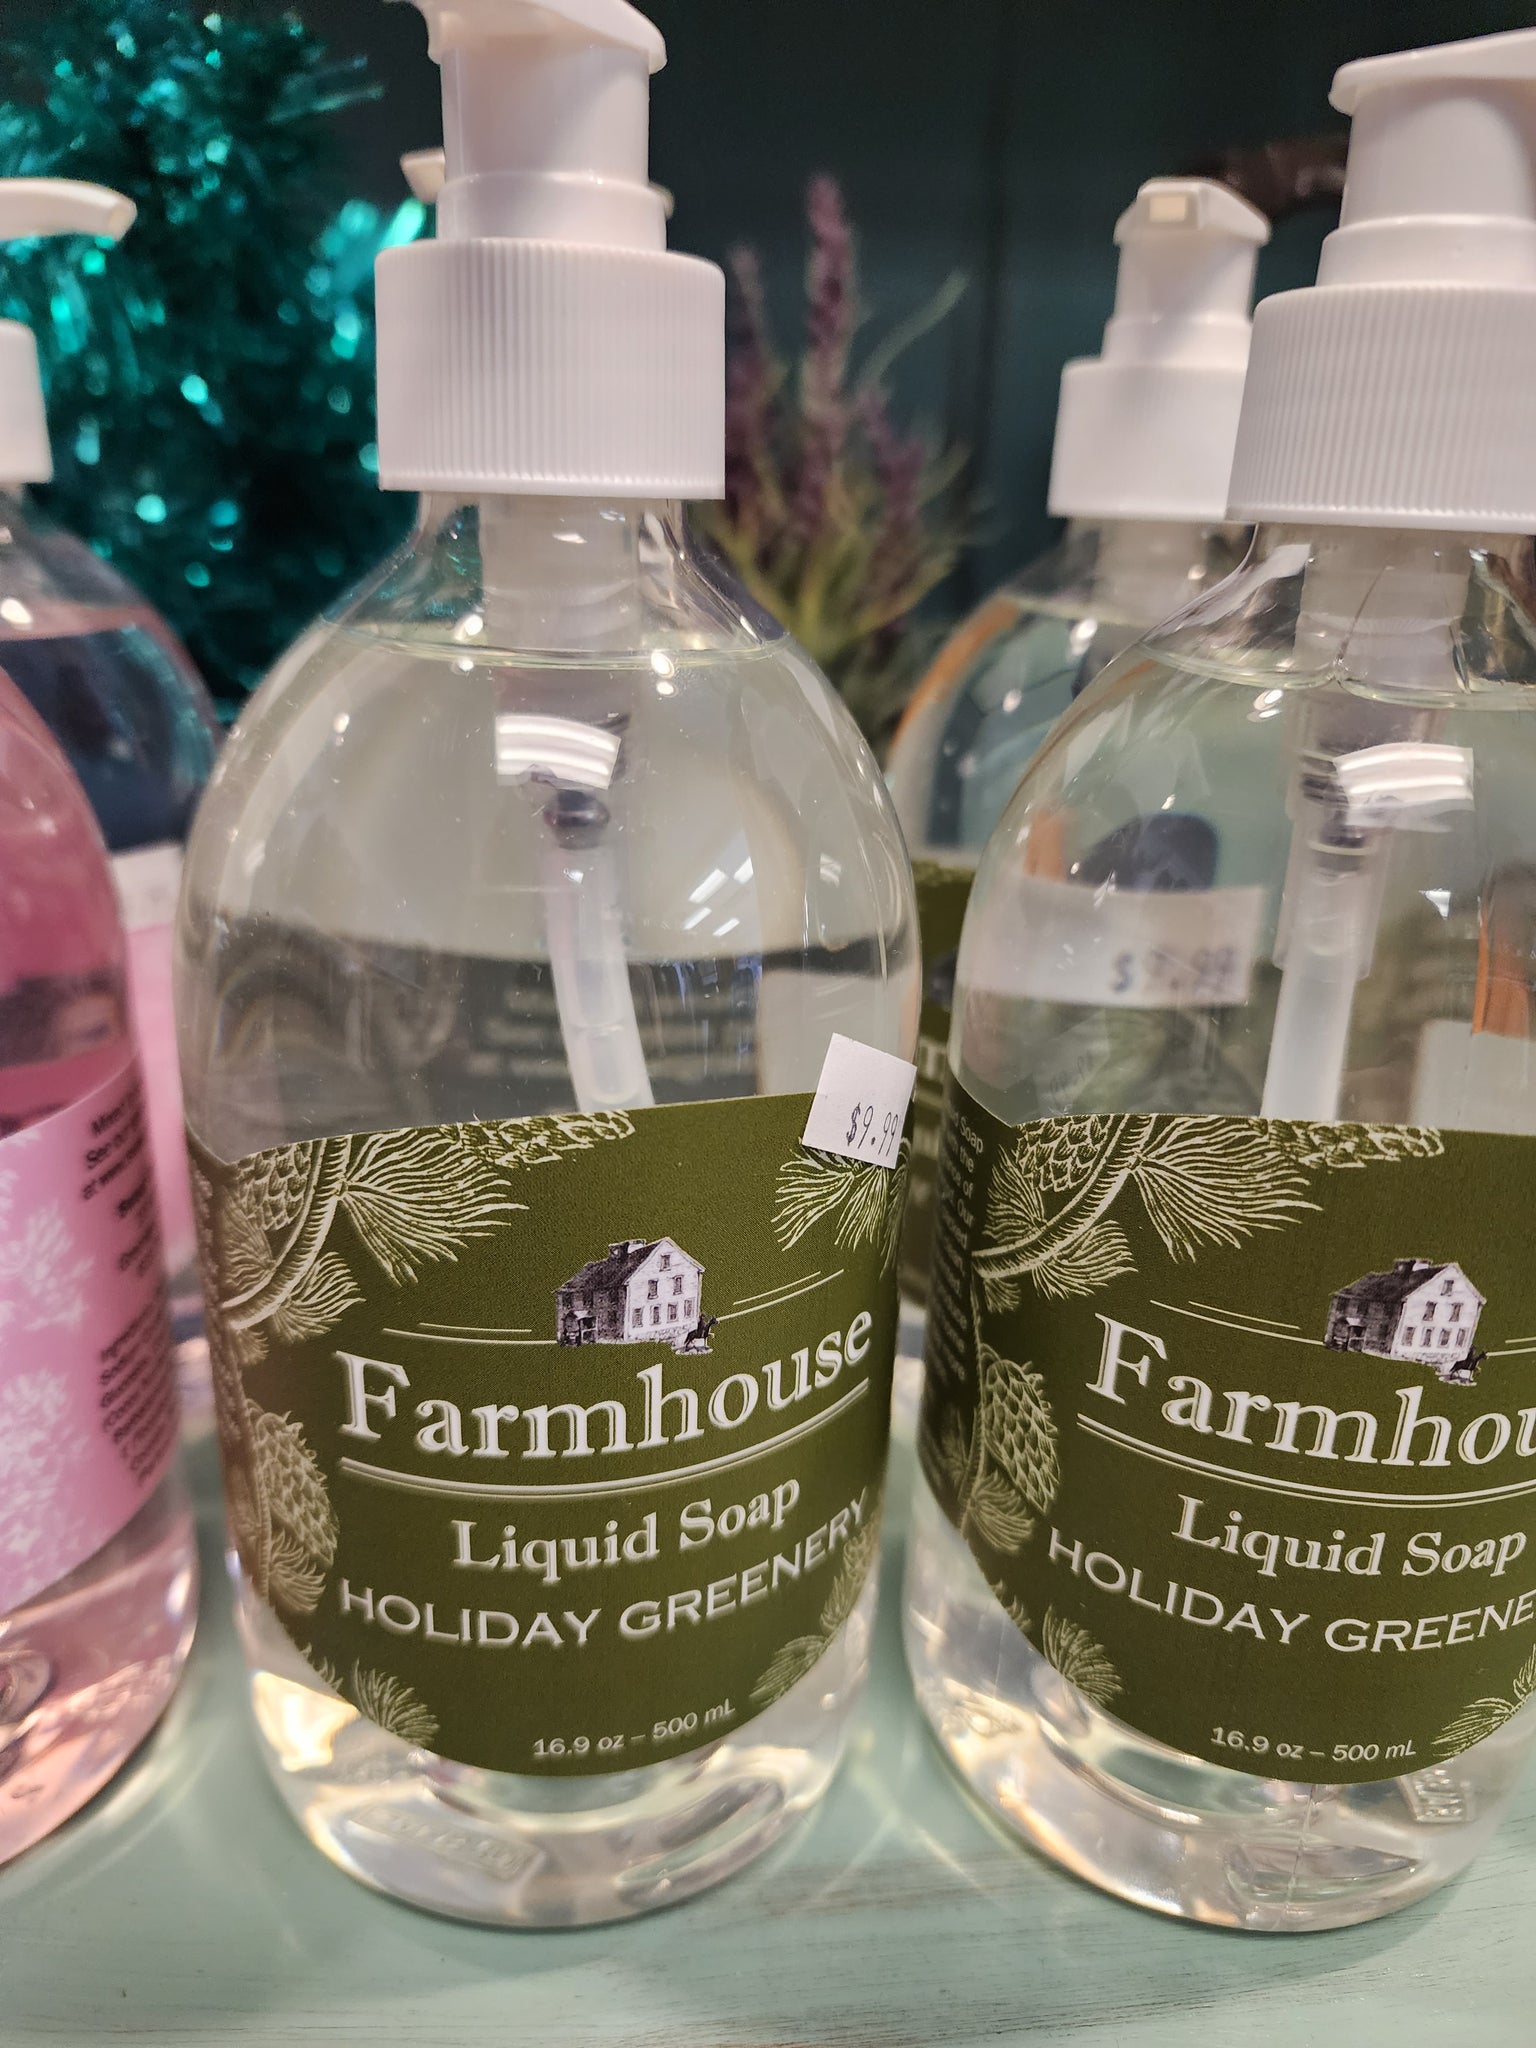 Farmhouse liquid soap